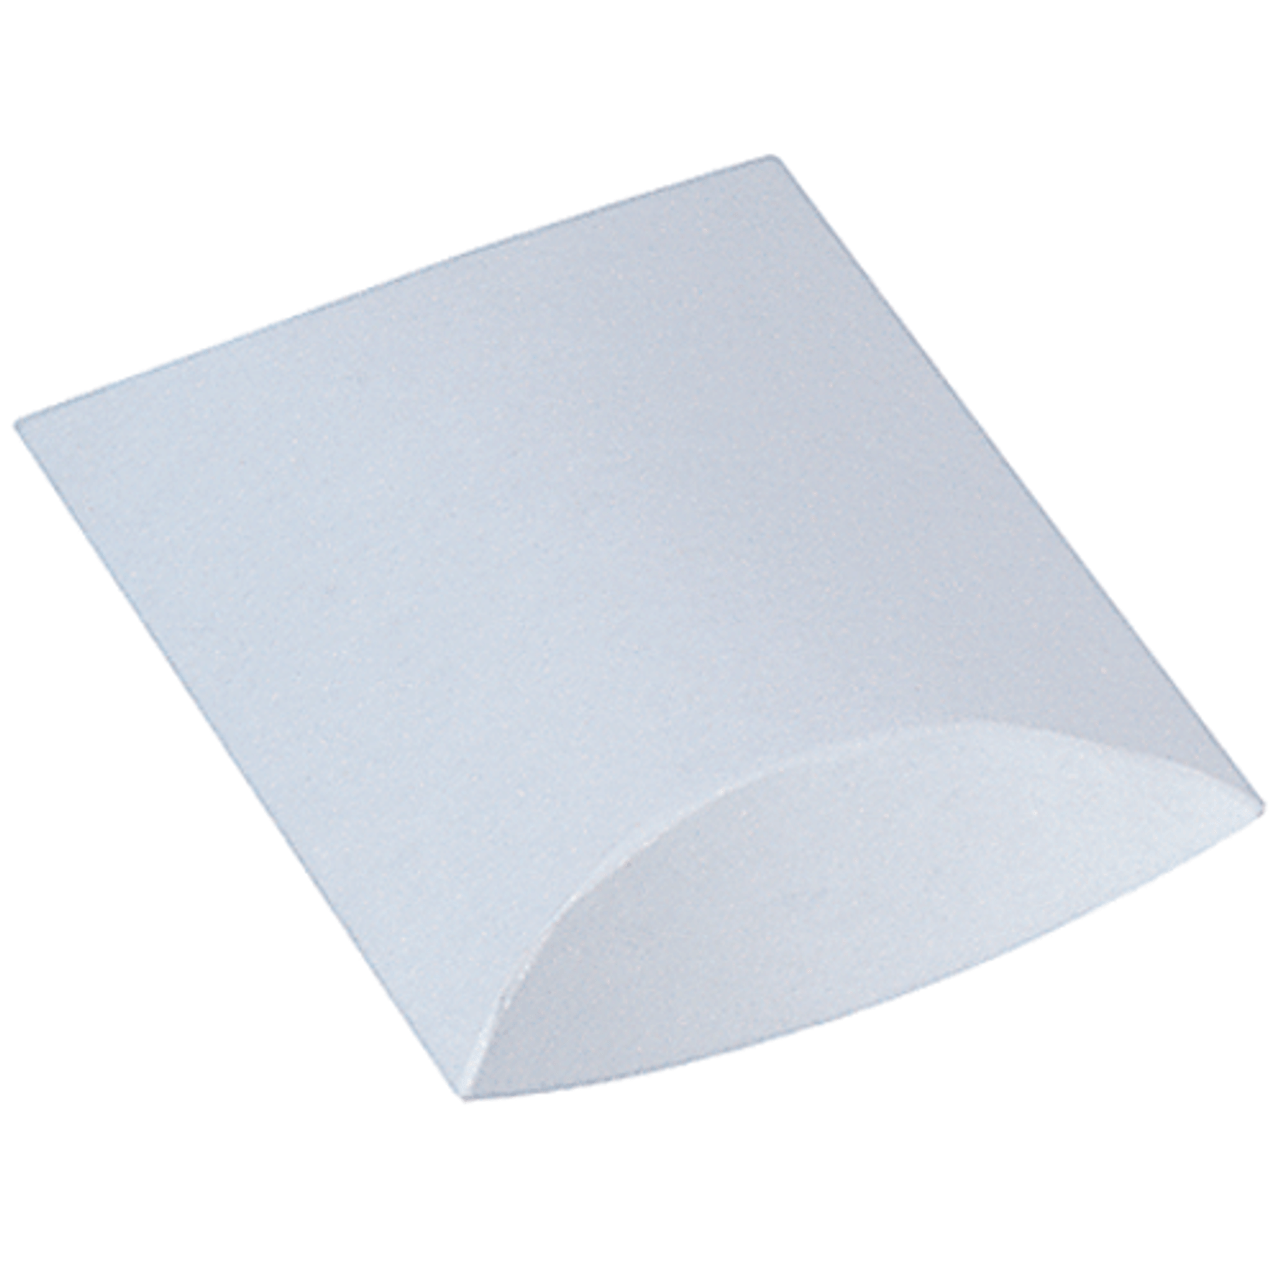 White Paper Pillow Box (3 sizes)